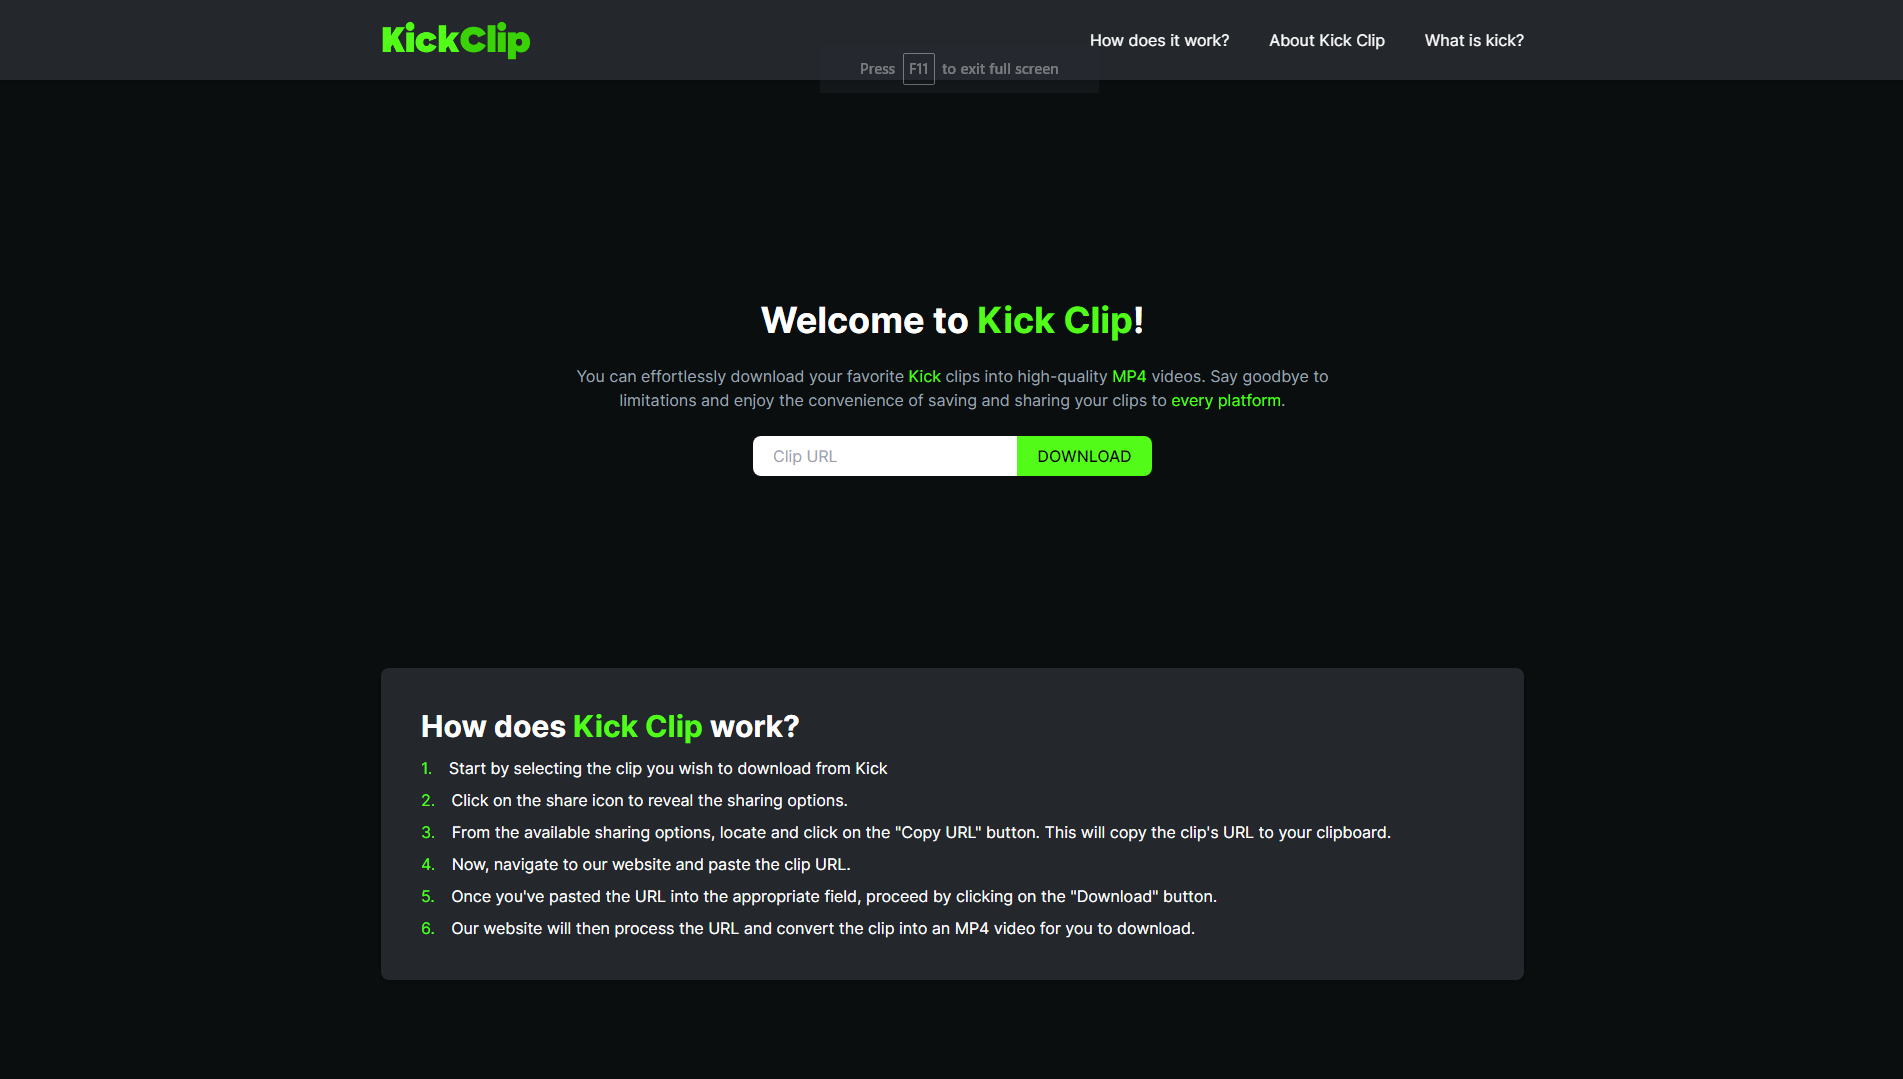 Download razendsnel je favoriete Kick clips met Kickclip.com